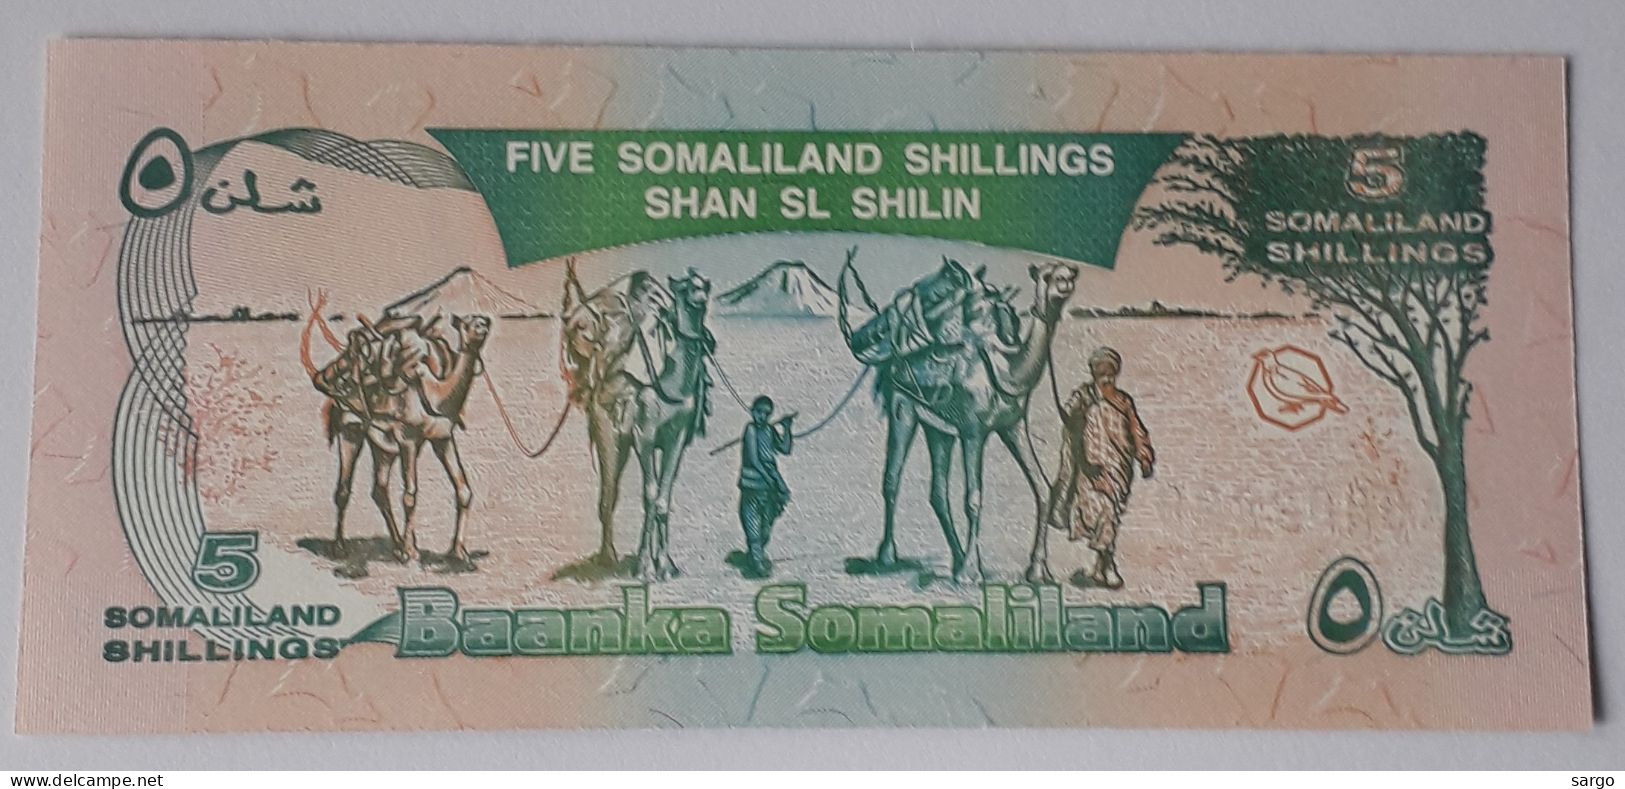 SOMALILAND - SOMALIA  - 5 SHILLINGS - P 1  (1994)  - UNC -  BANKNOTES - PAPER MONEY - CARTAMONETA - - Somalie